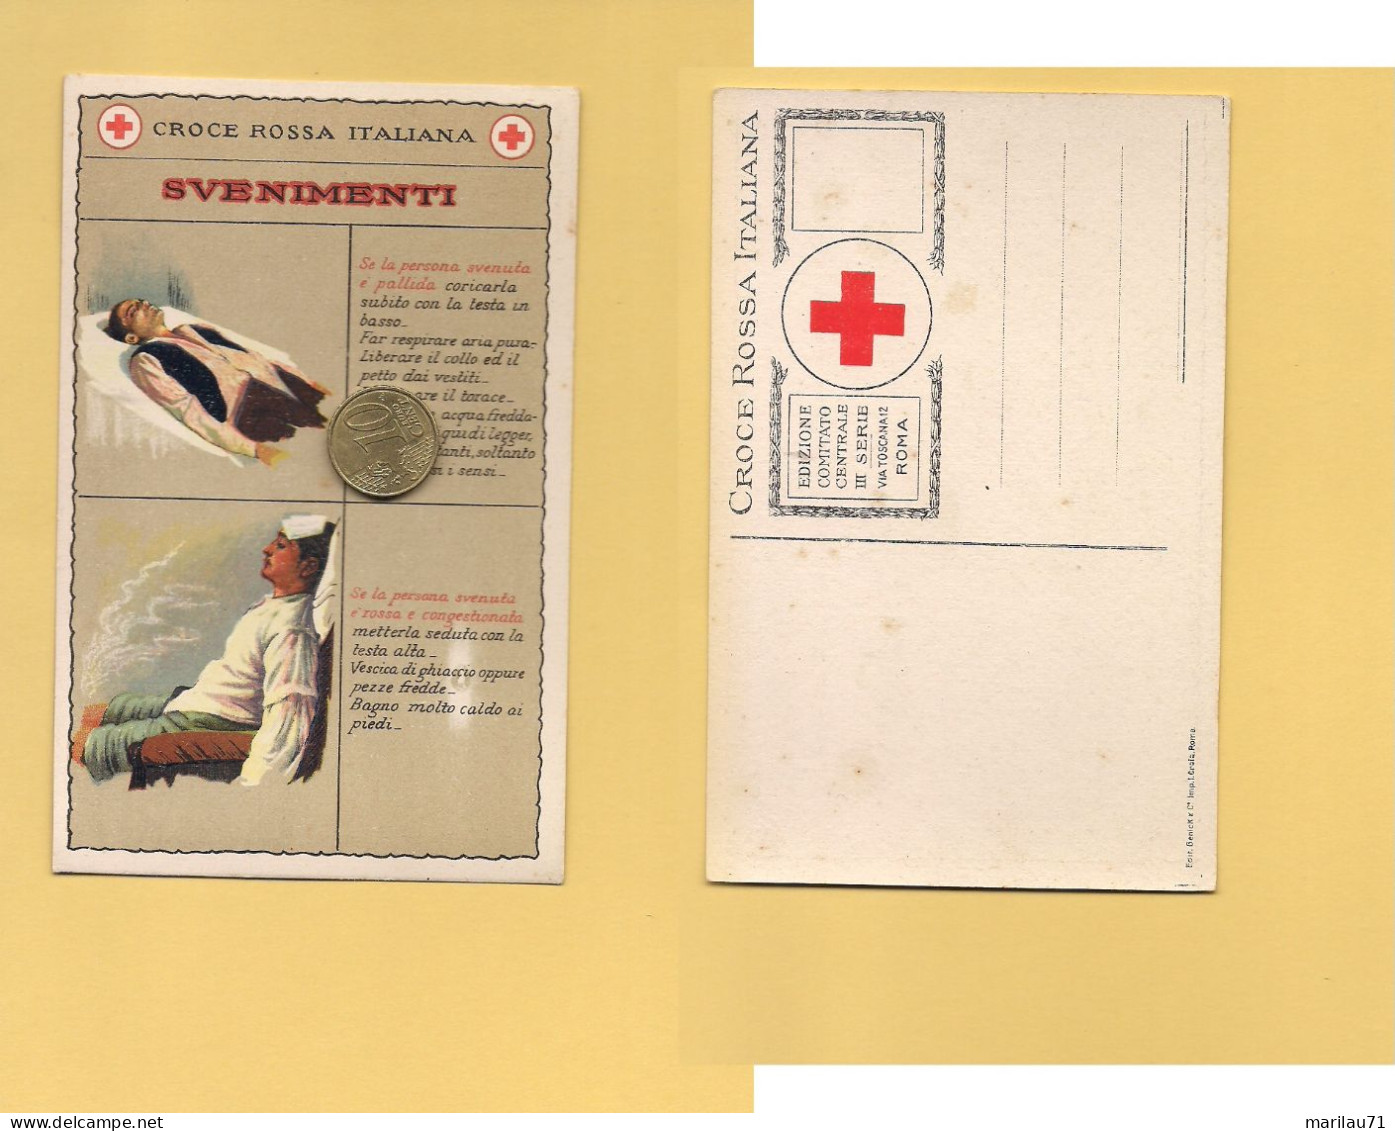 P3584 CROCE ROSSA ITALIANA III SERIE Svenimenti Anni '30 - Red Cross